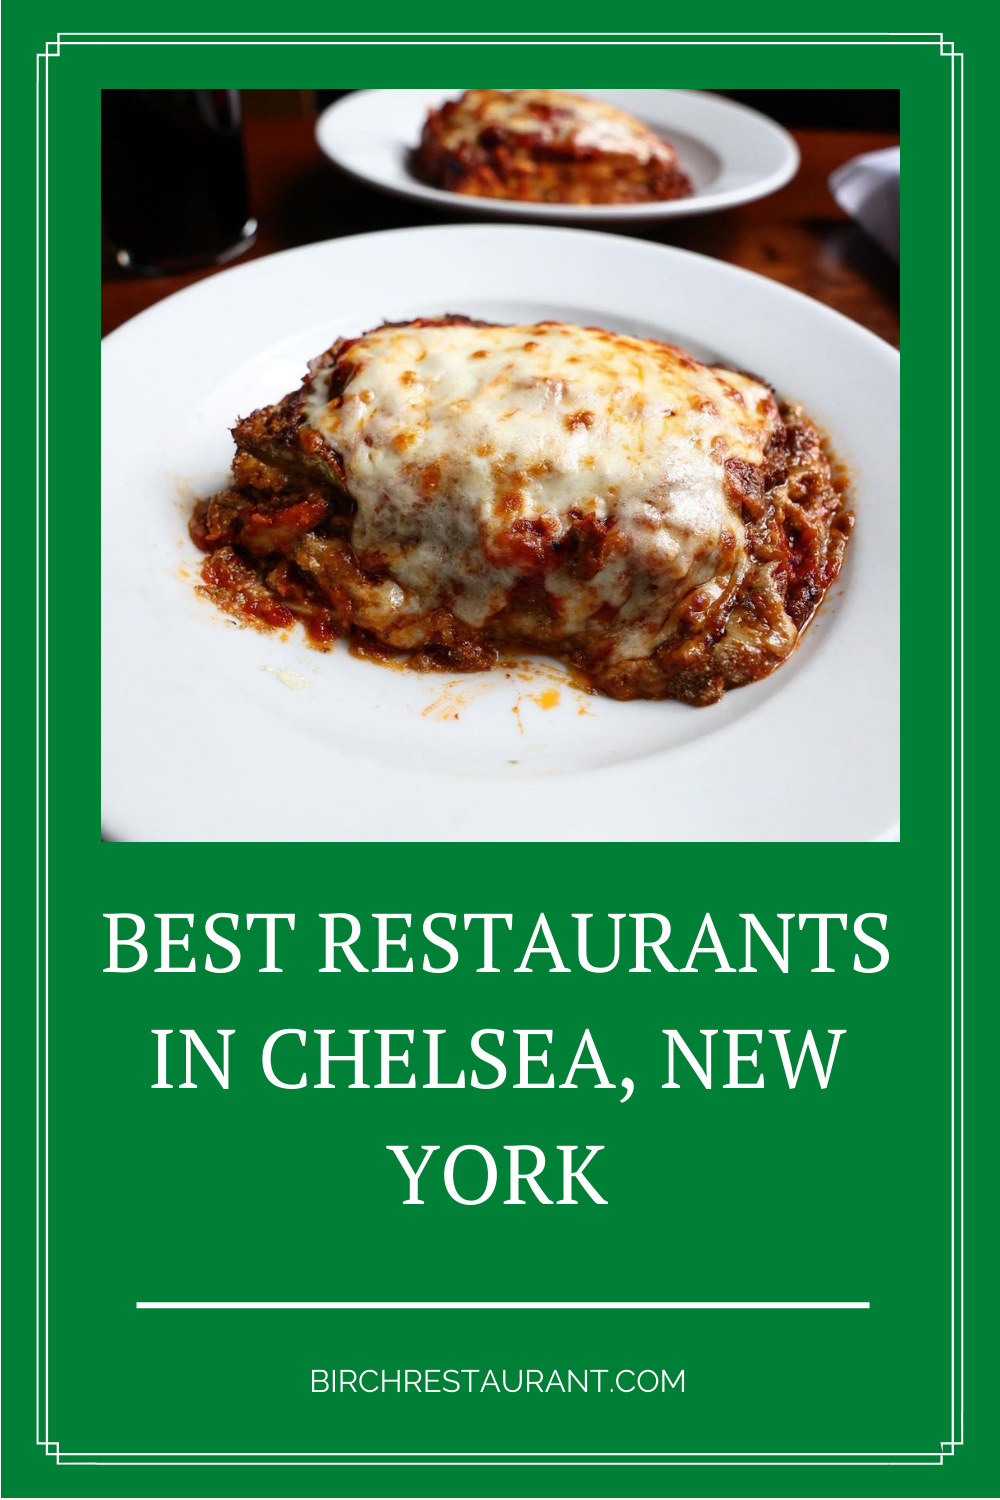 Best Restaurants in Chelsea, New York